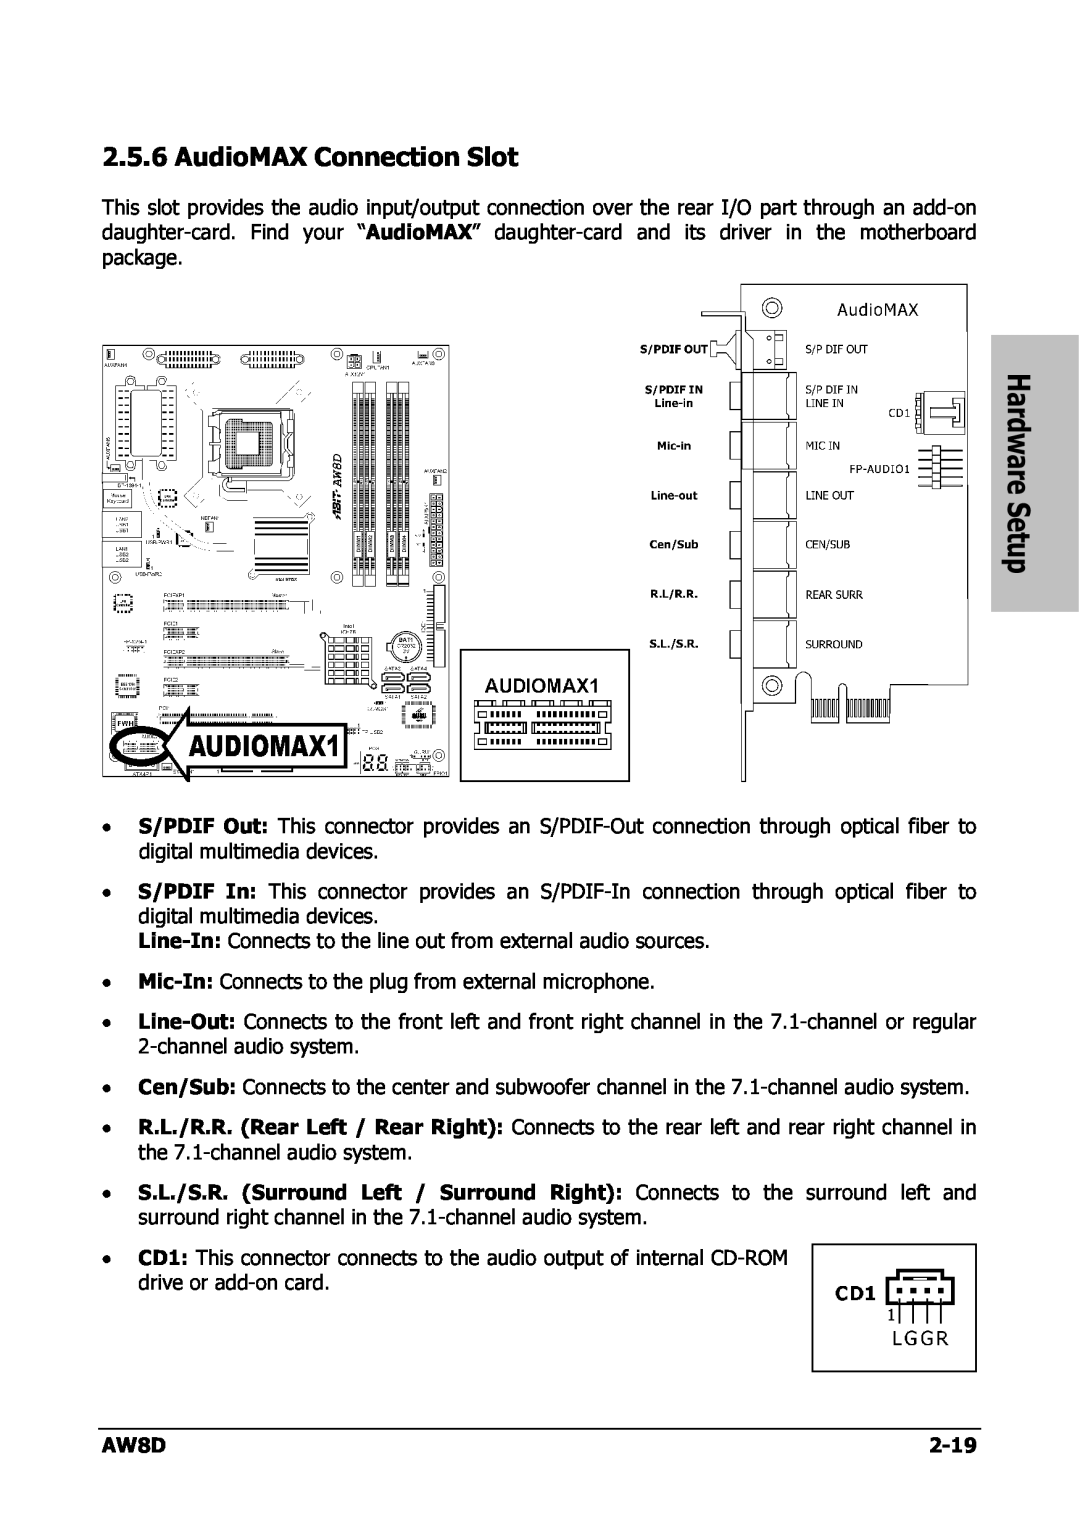 Intel AW8D user manual AudioMAX Connection Slot, Hardware Setup 